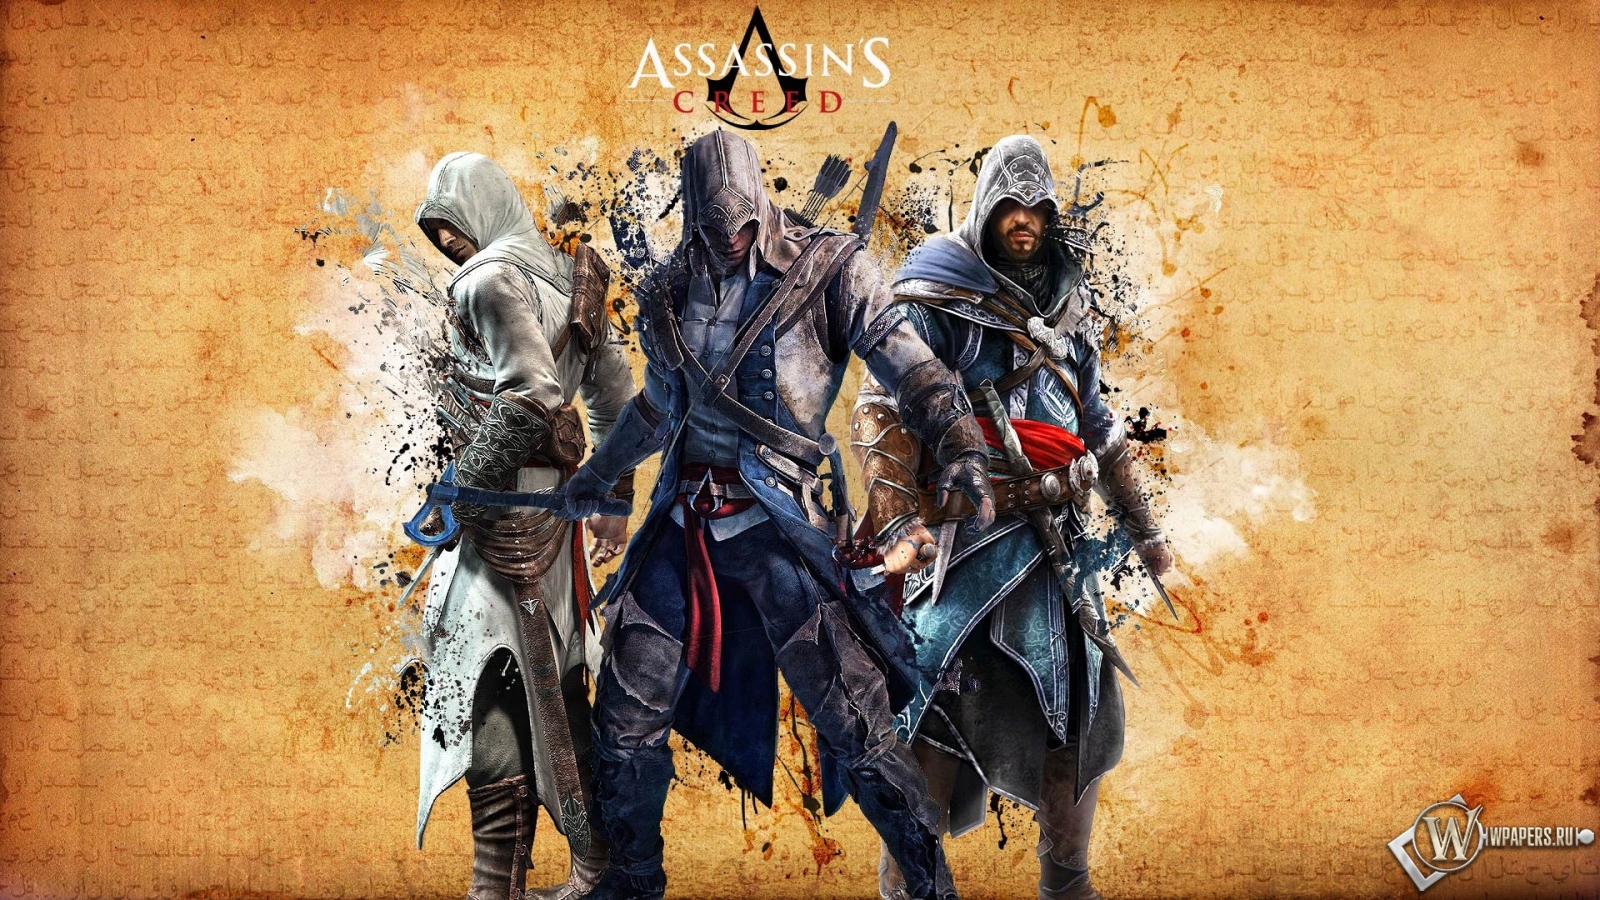 Assassins creed 1600x900